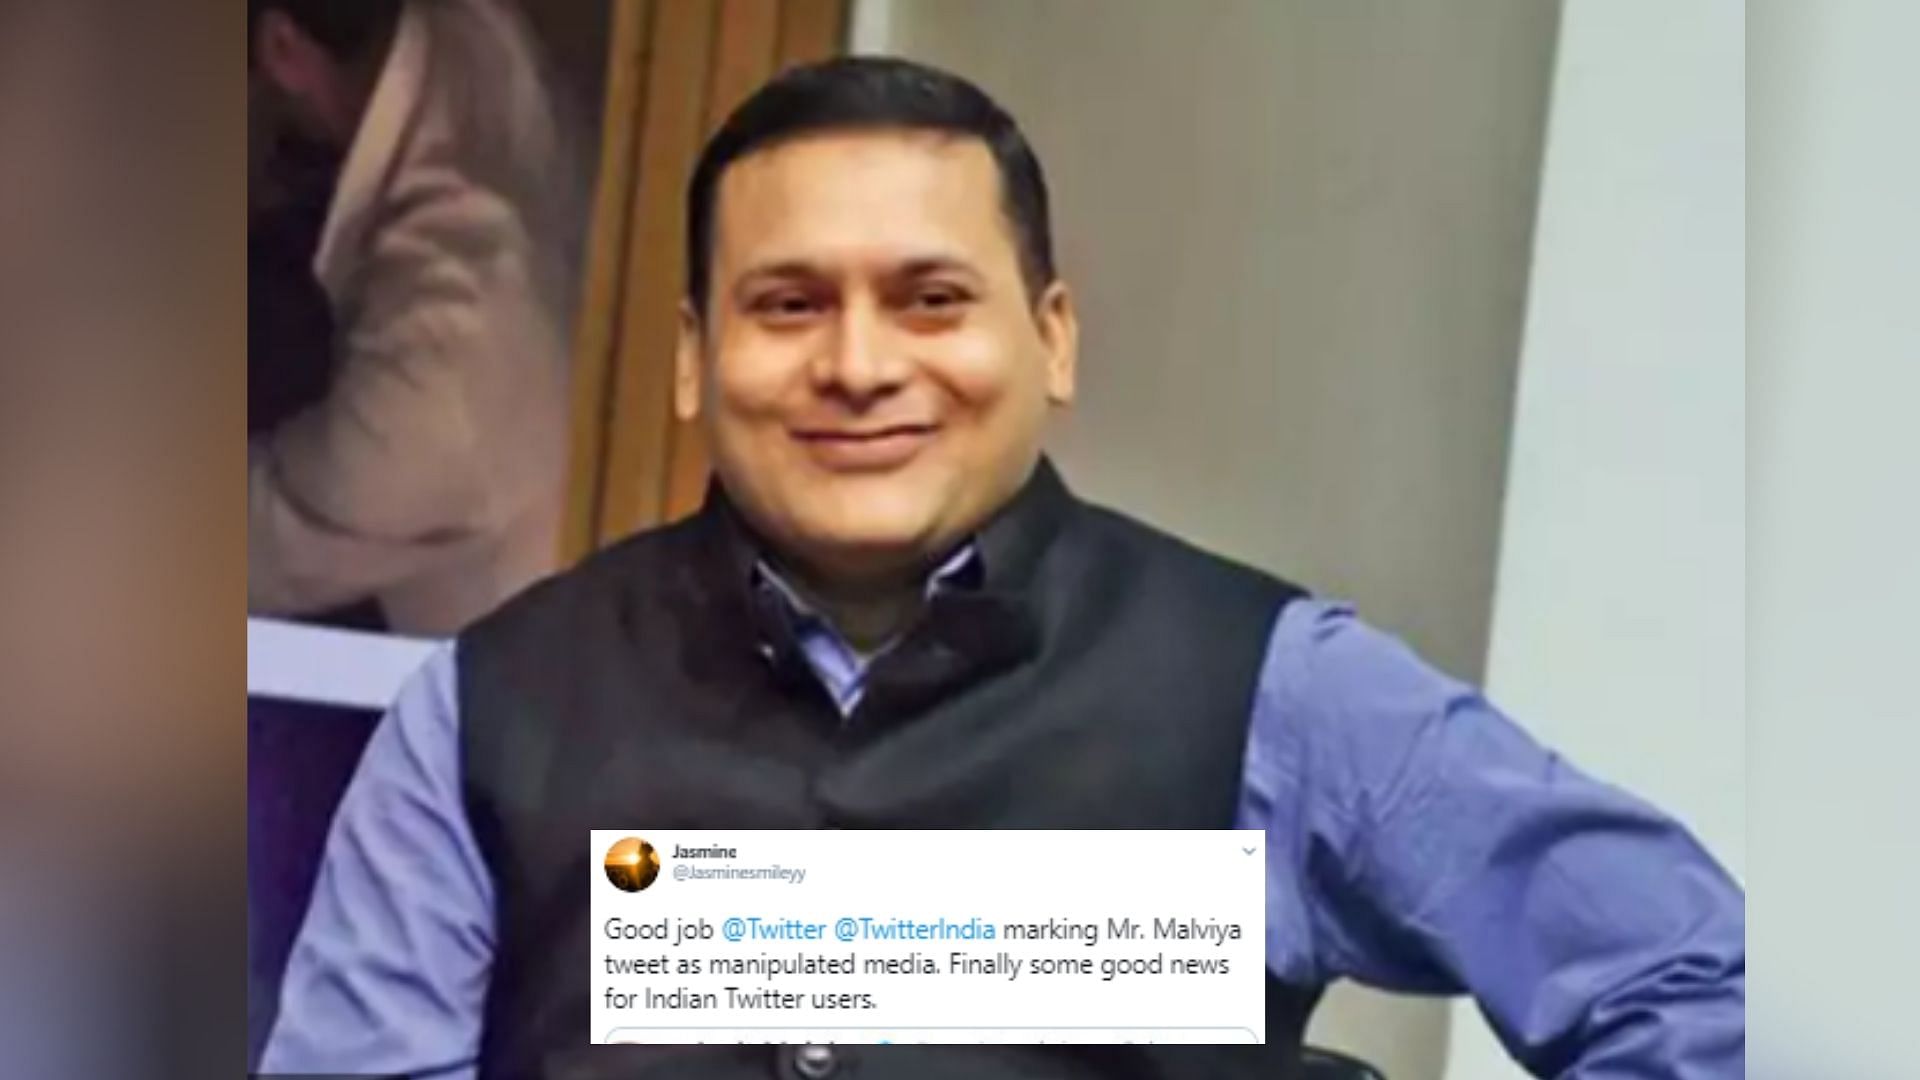 Twitter Tags Amit Malviya's Tweet as 'Manipulated', Netizens Happy